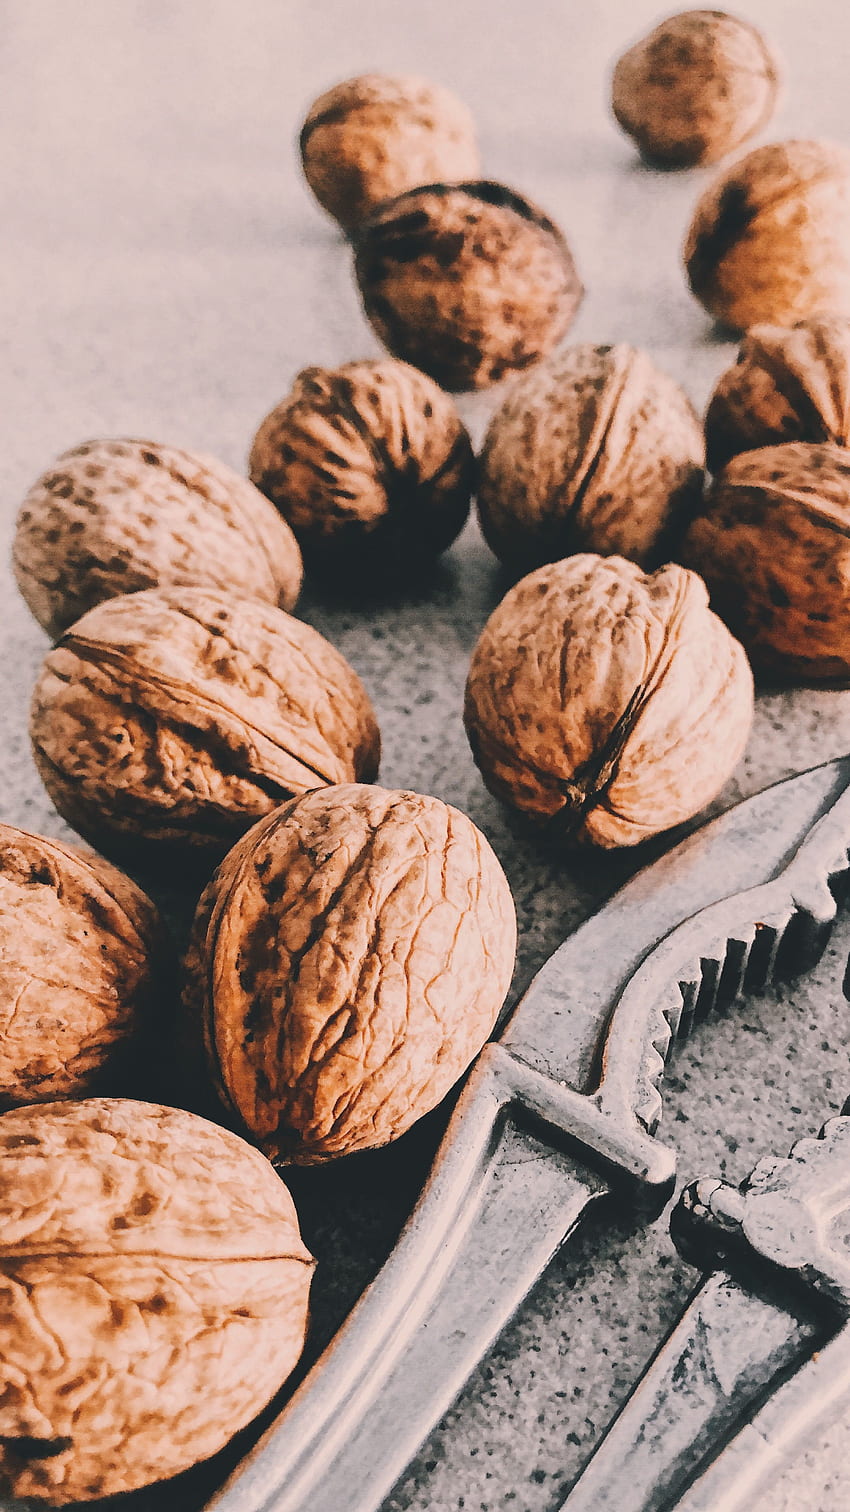 HD wallpaper wallnut and almond lot nuts shell almonds forest walnut   Wallpaper Flare